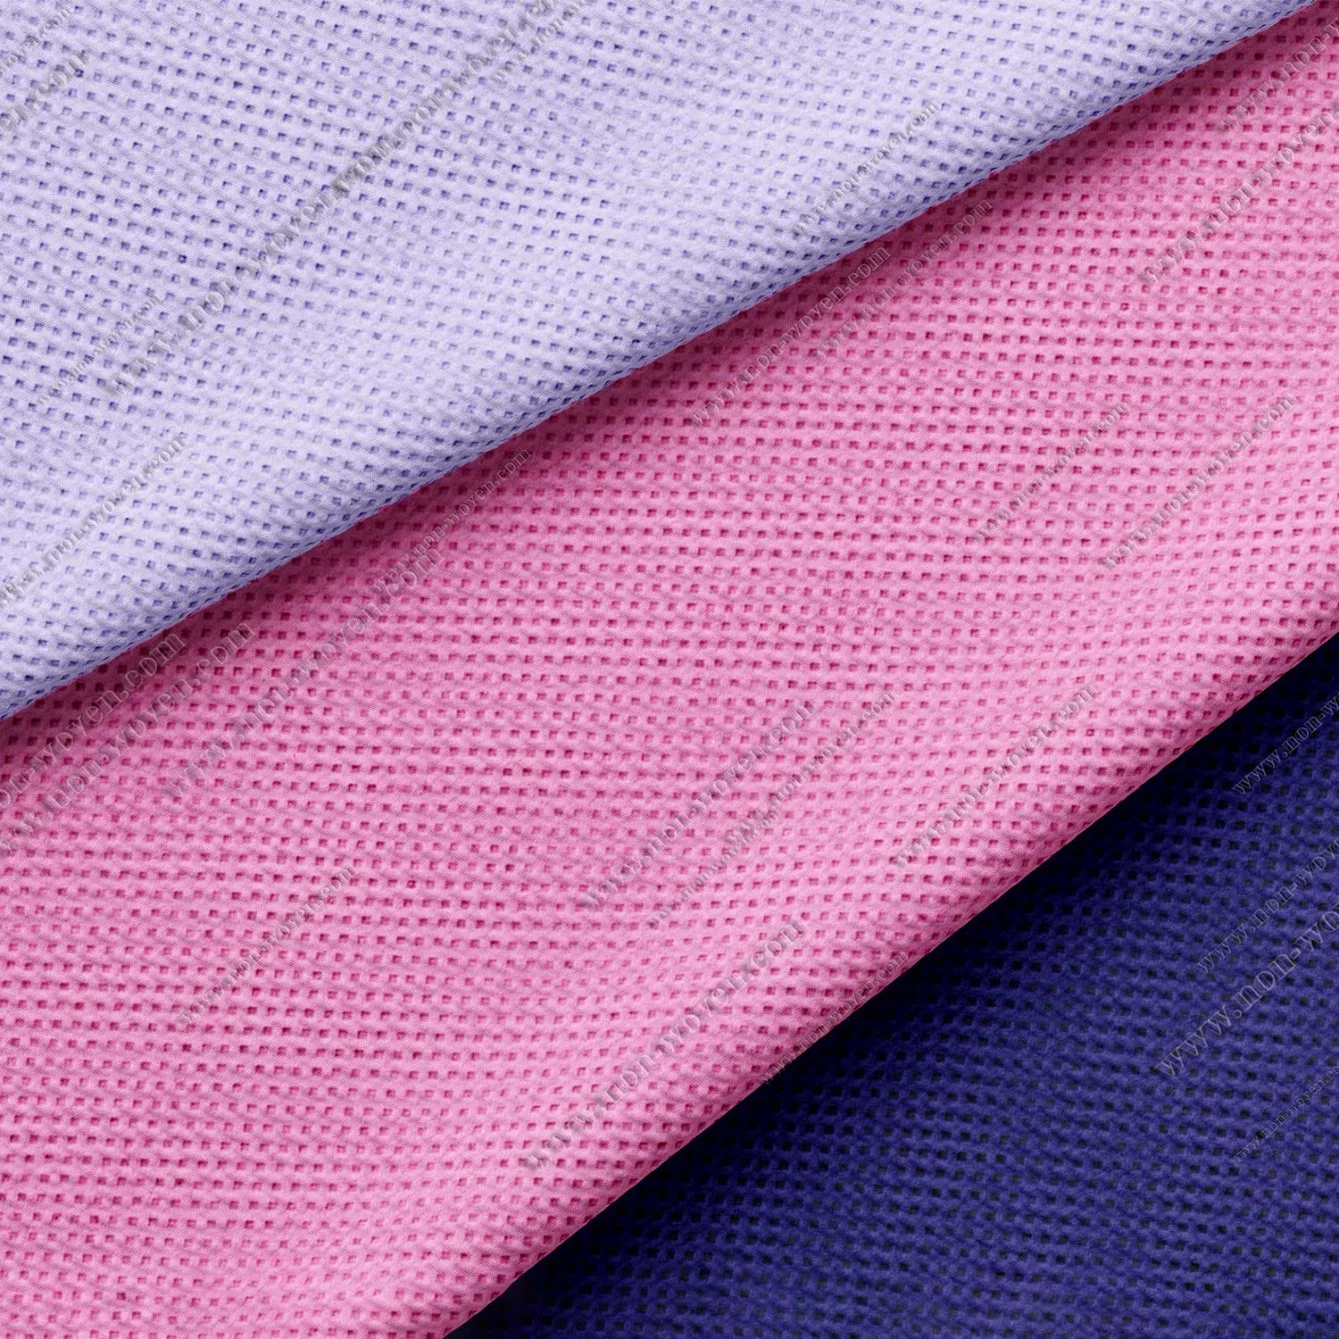 Cjheap Chemical Fabric PP Spunbond Nonwoven Fabric